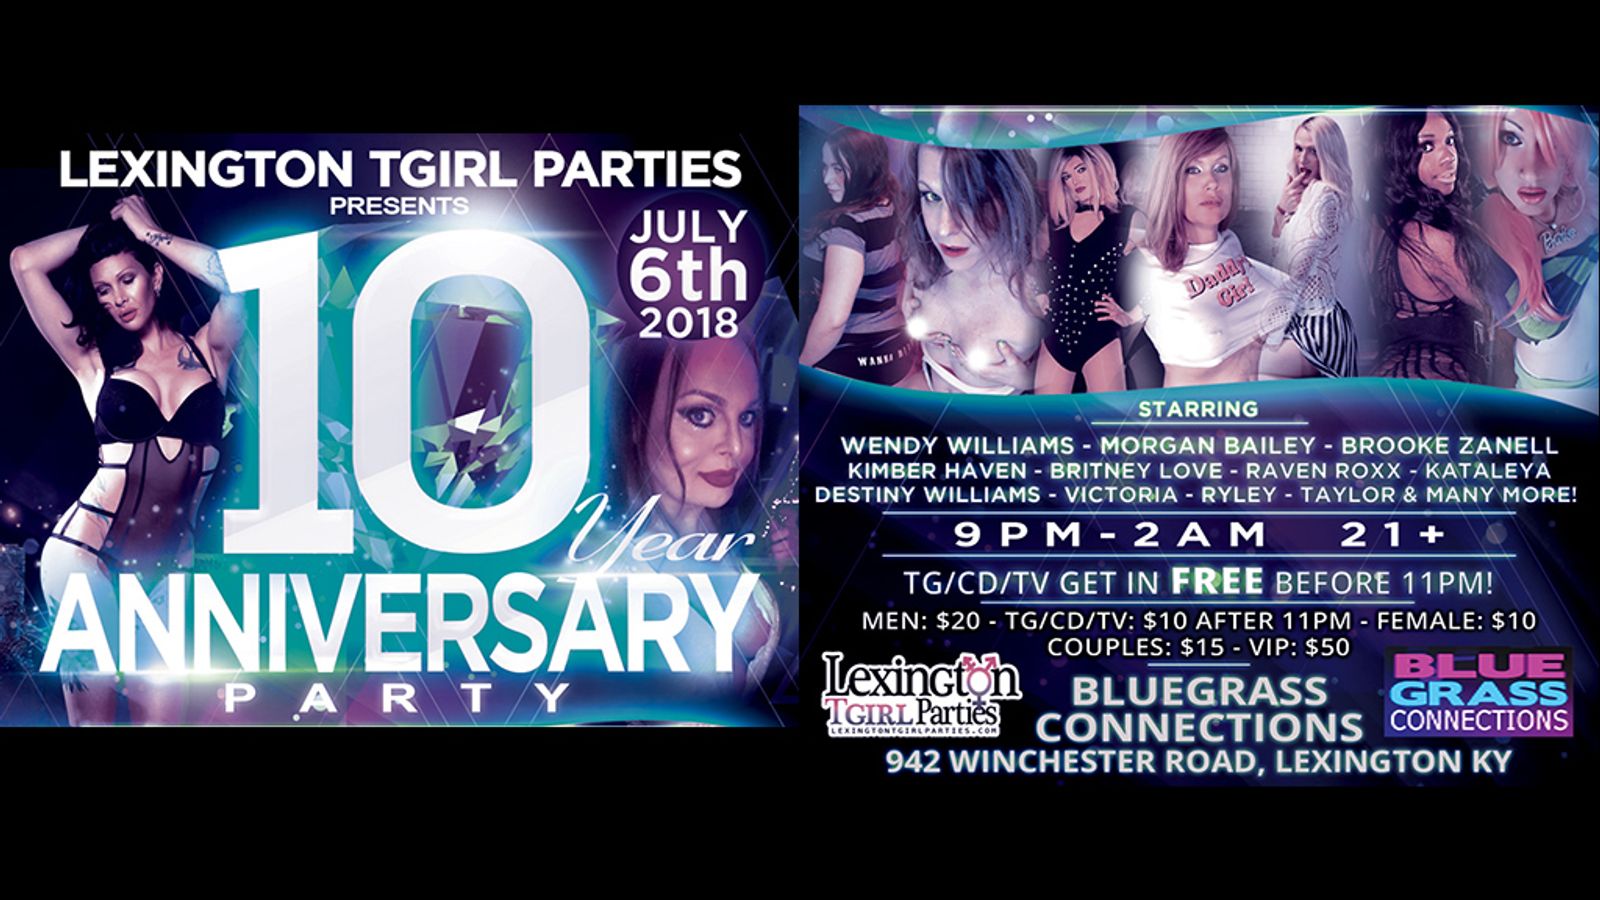 Lexington Tgirl Parties Celebrate Their 10-Year Anniversary 